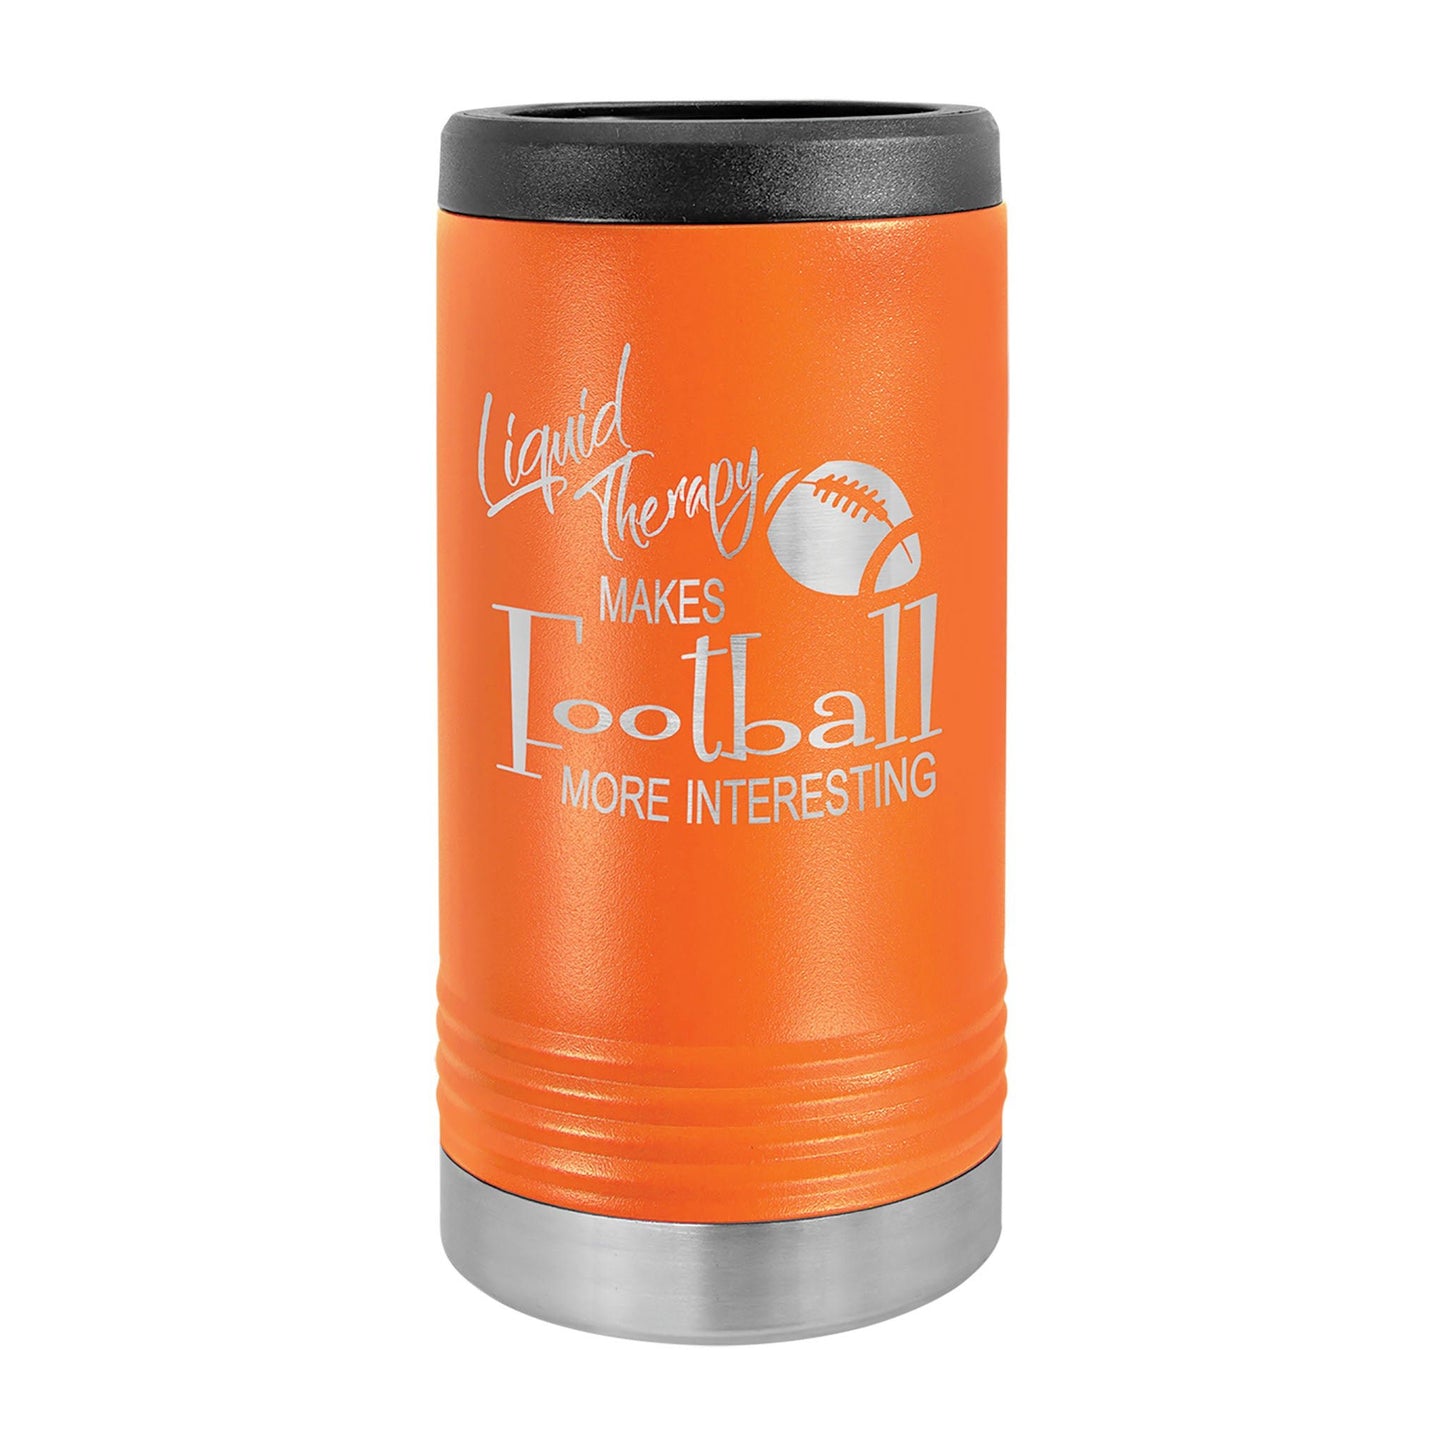 Personalized Polar Camel® 12oz Slim Insulated Beverage Holder - Etchified-Polar Camel®-LBH54